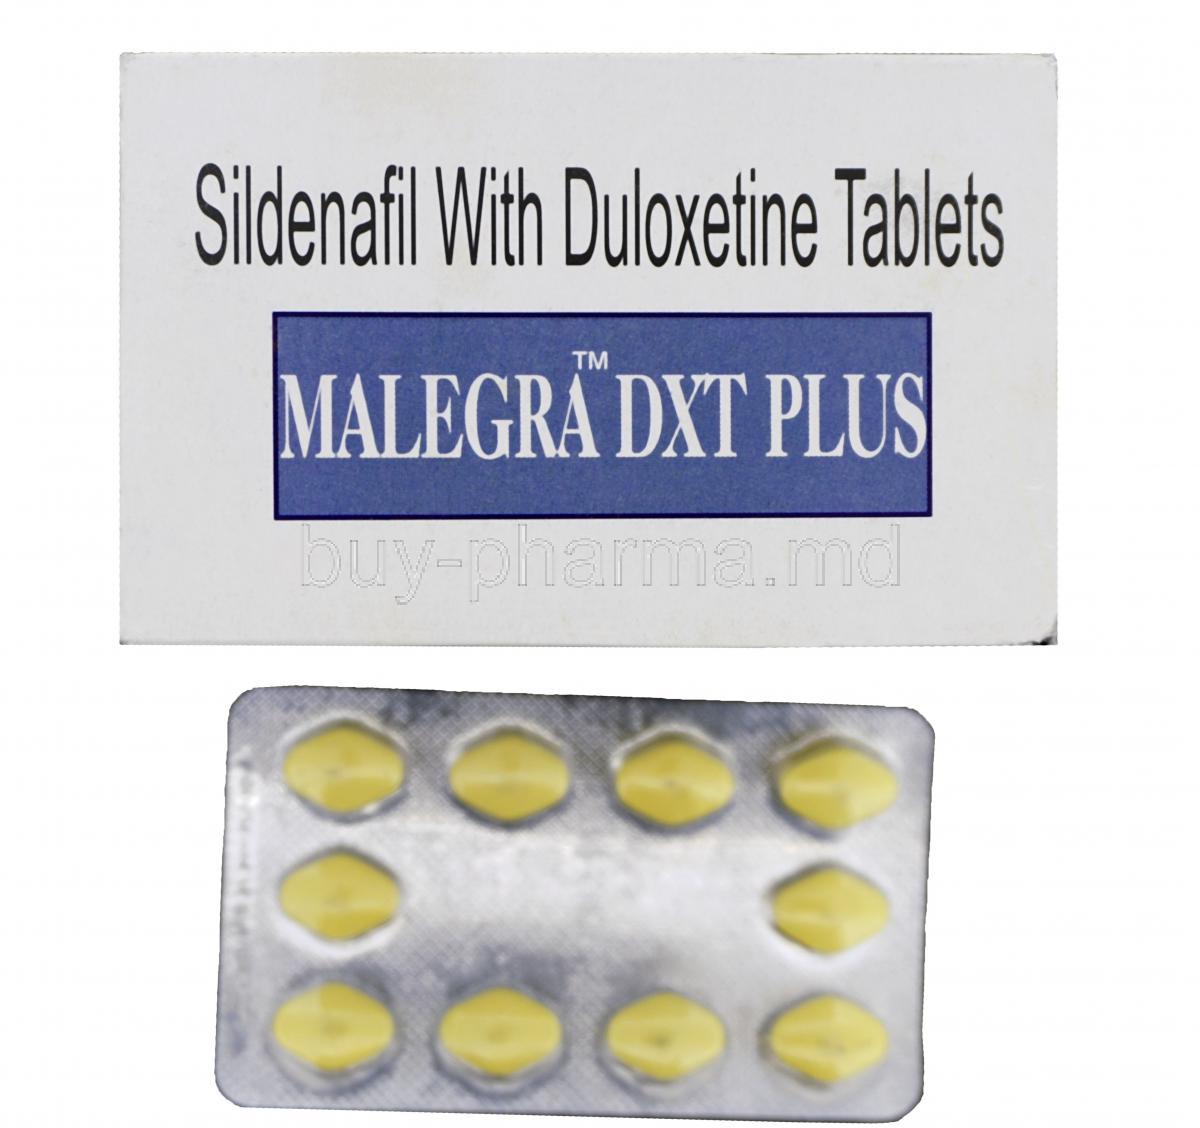 Malegra-DXT Plus, Sildenafil 100mg and Duloxetine 60mg